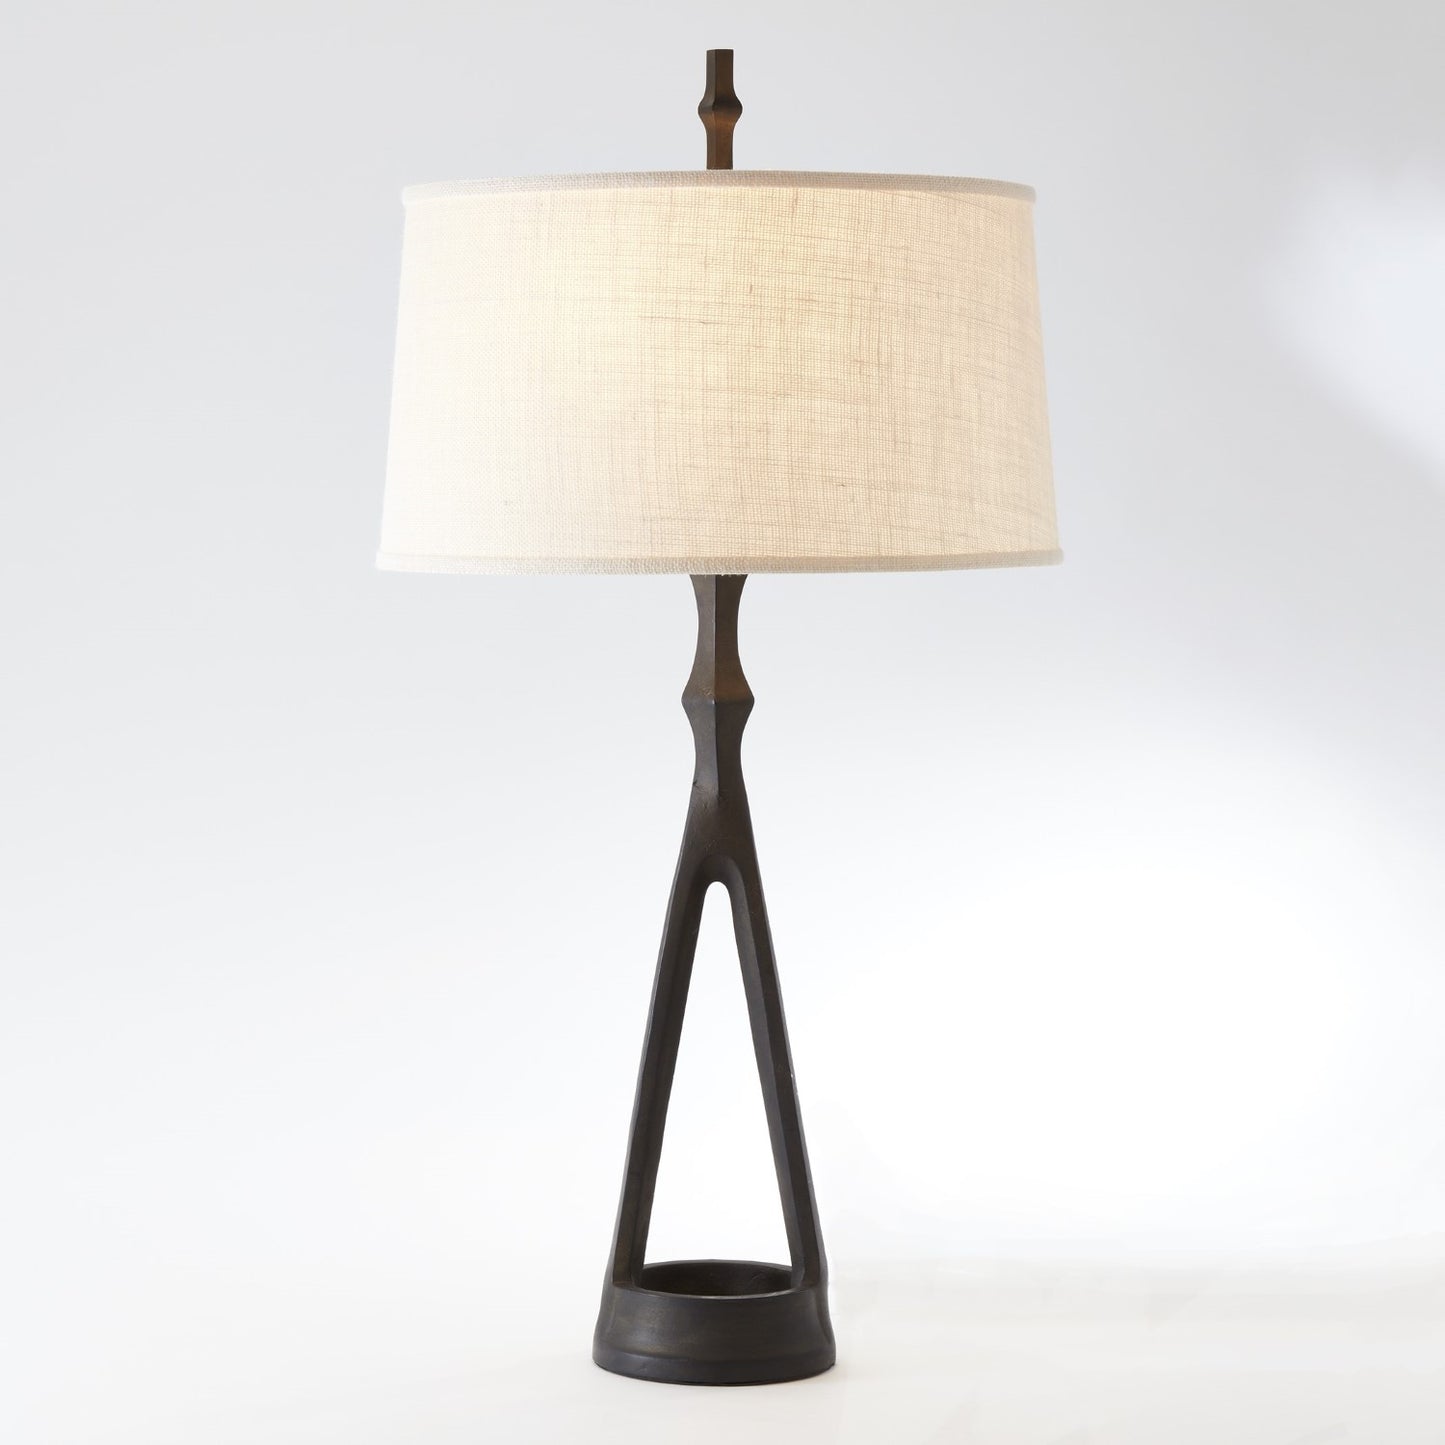 Compass Table Lamp - Grats Decor Interior Design & Build Inc.